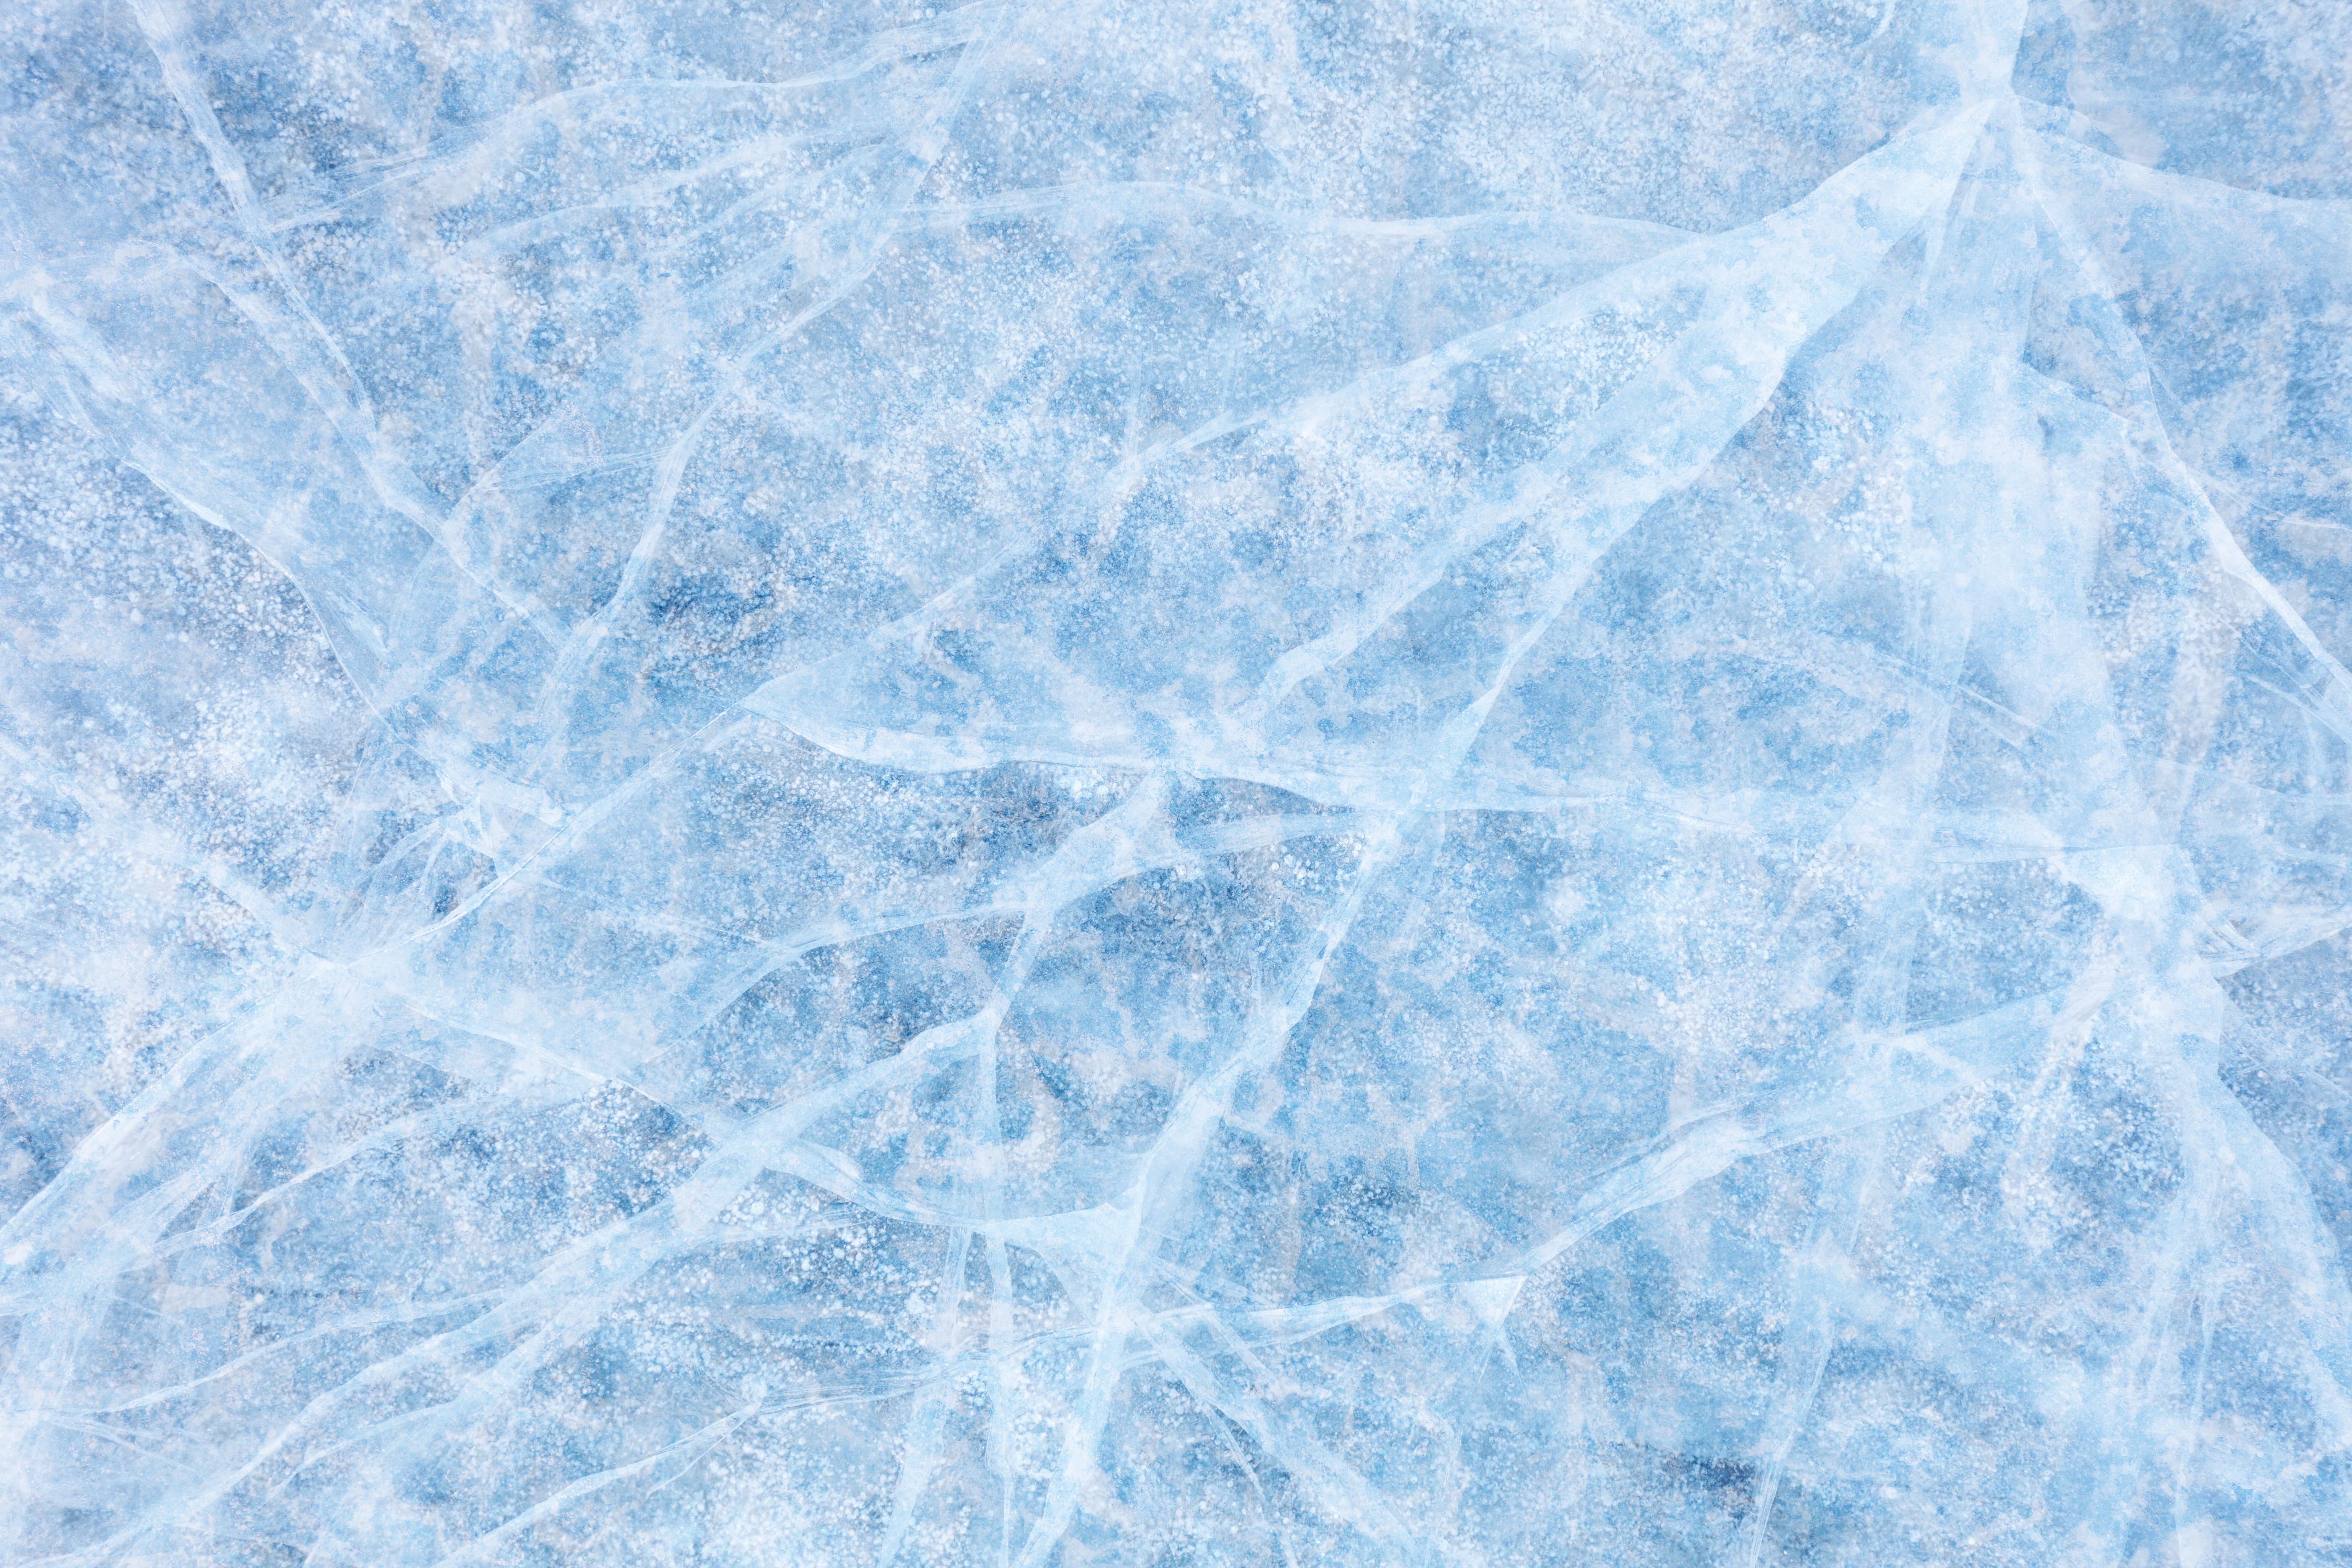 icy-image-background